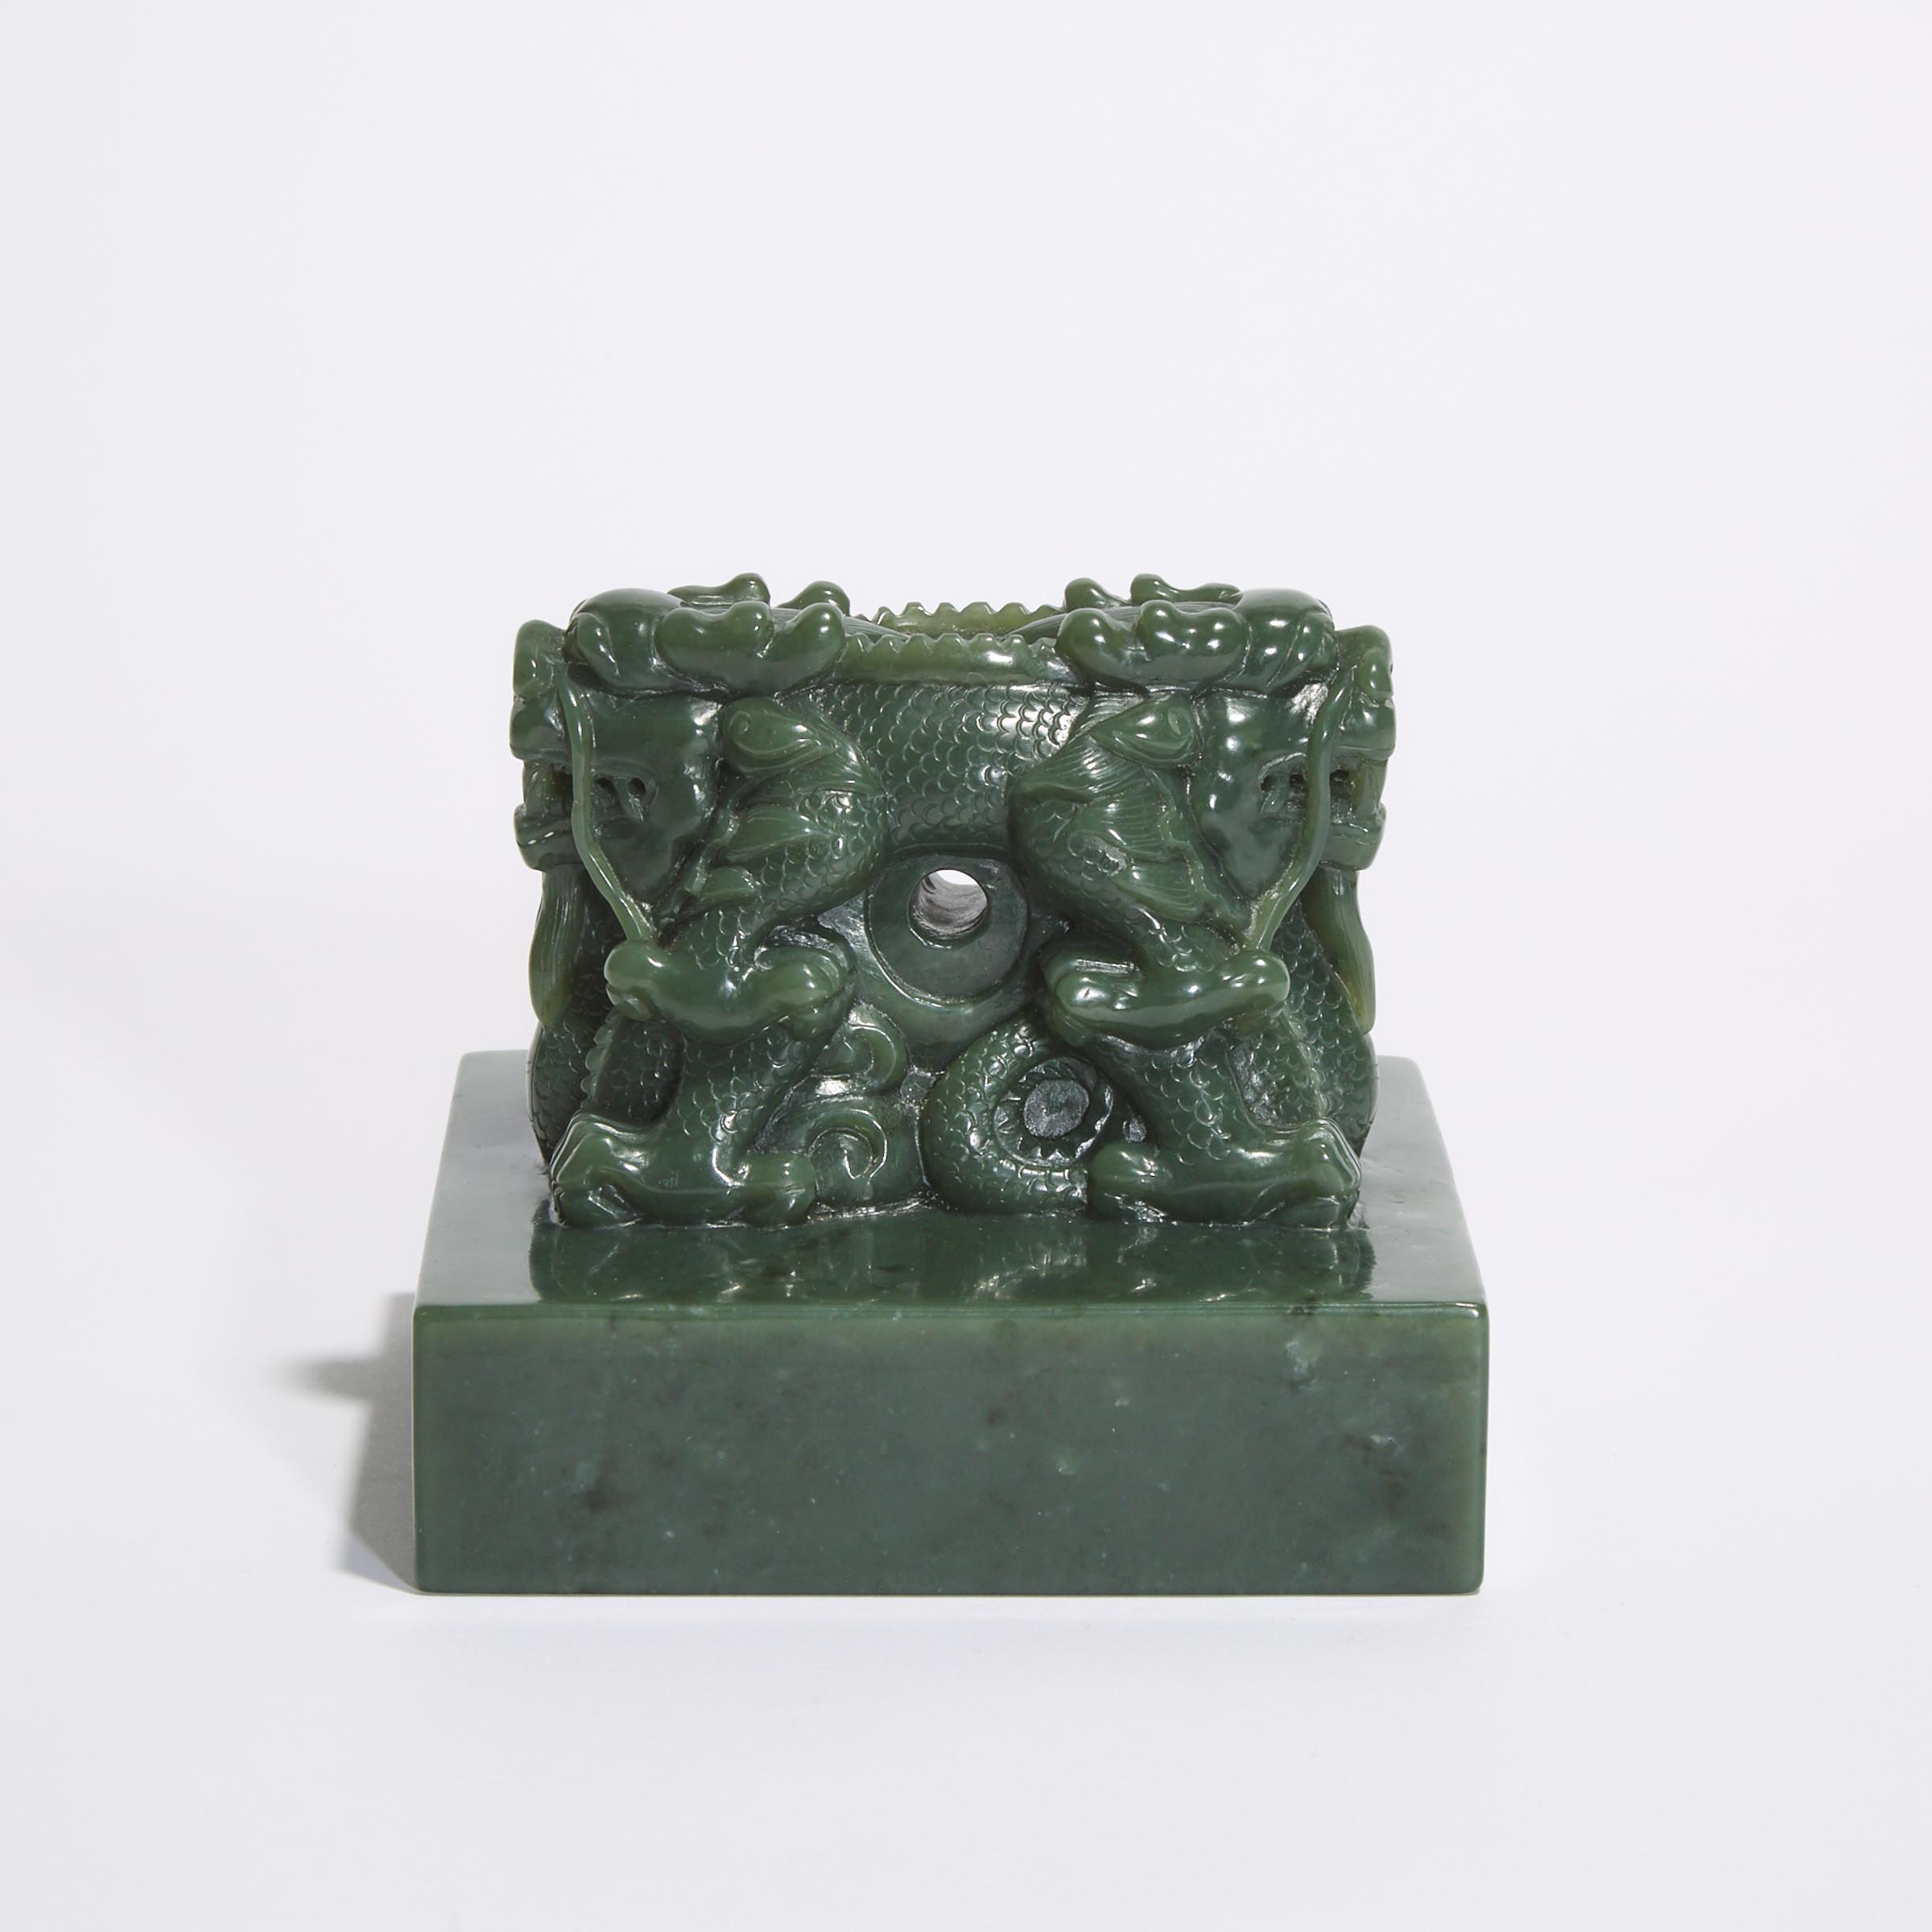 A Large Chinese Khotan Green Jade 'Dragon' Seal, Qing Dynasty, 19th Century